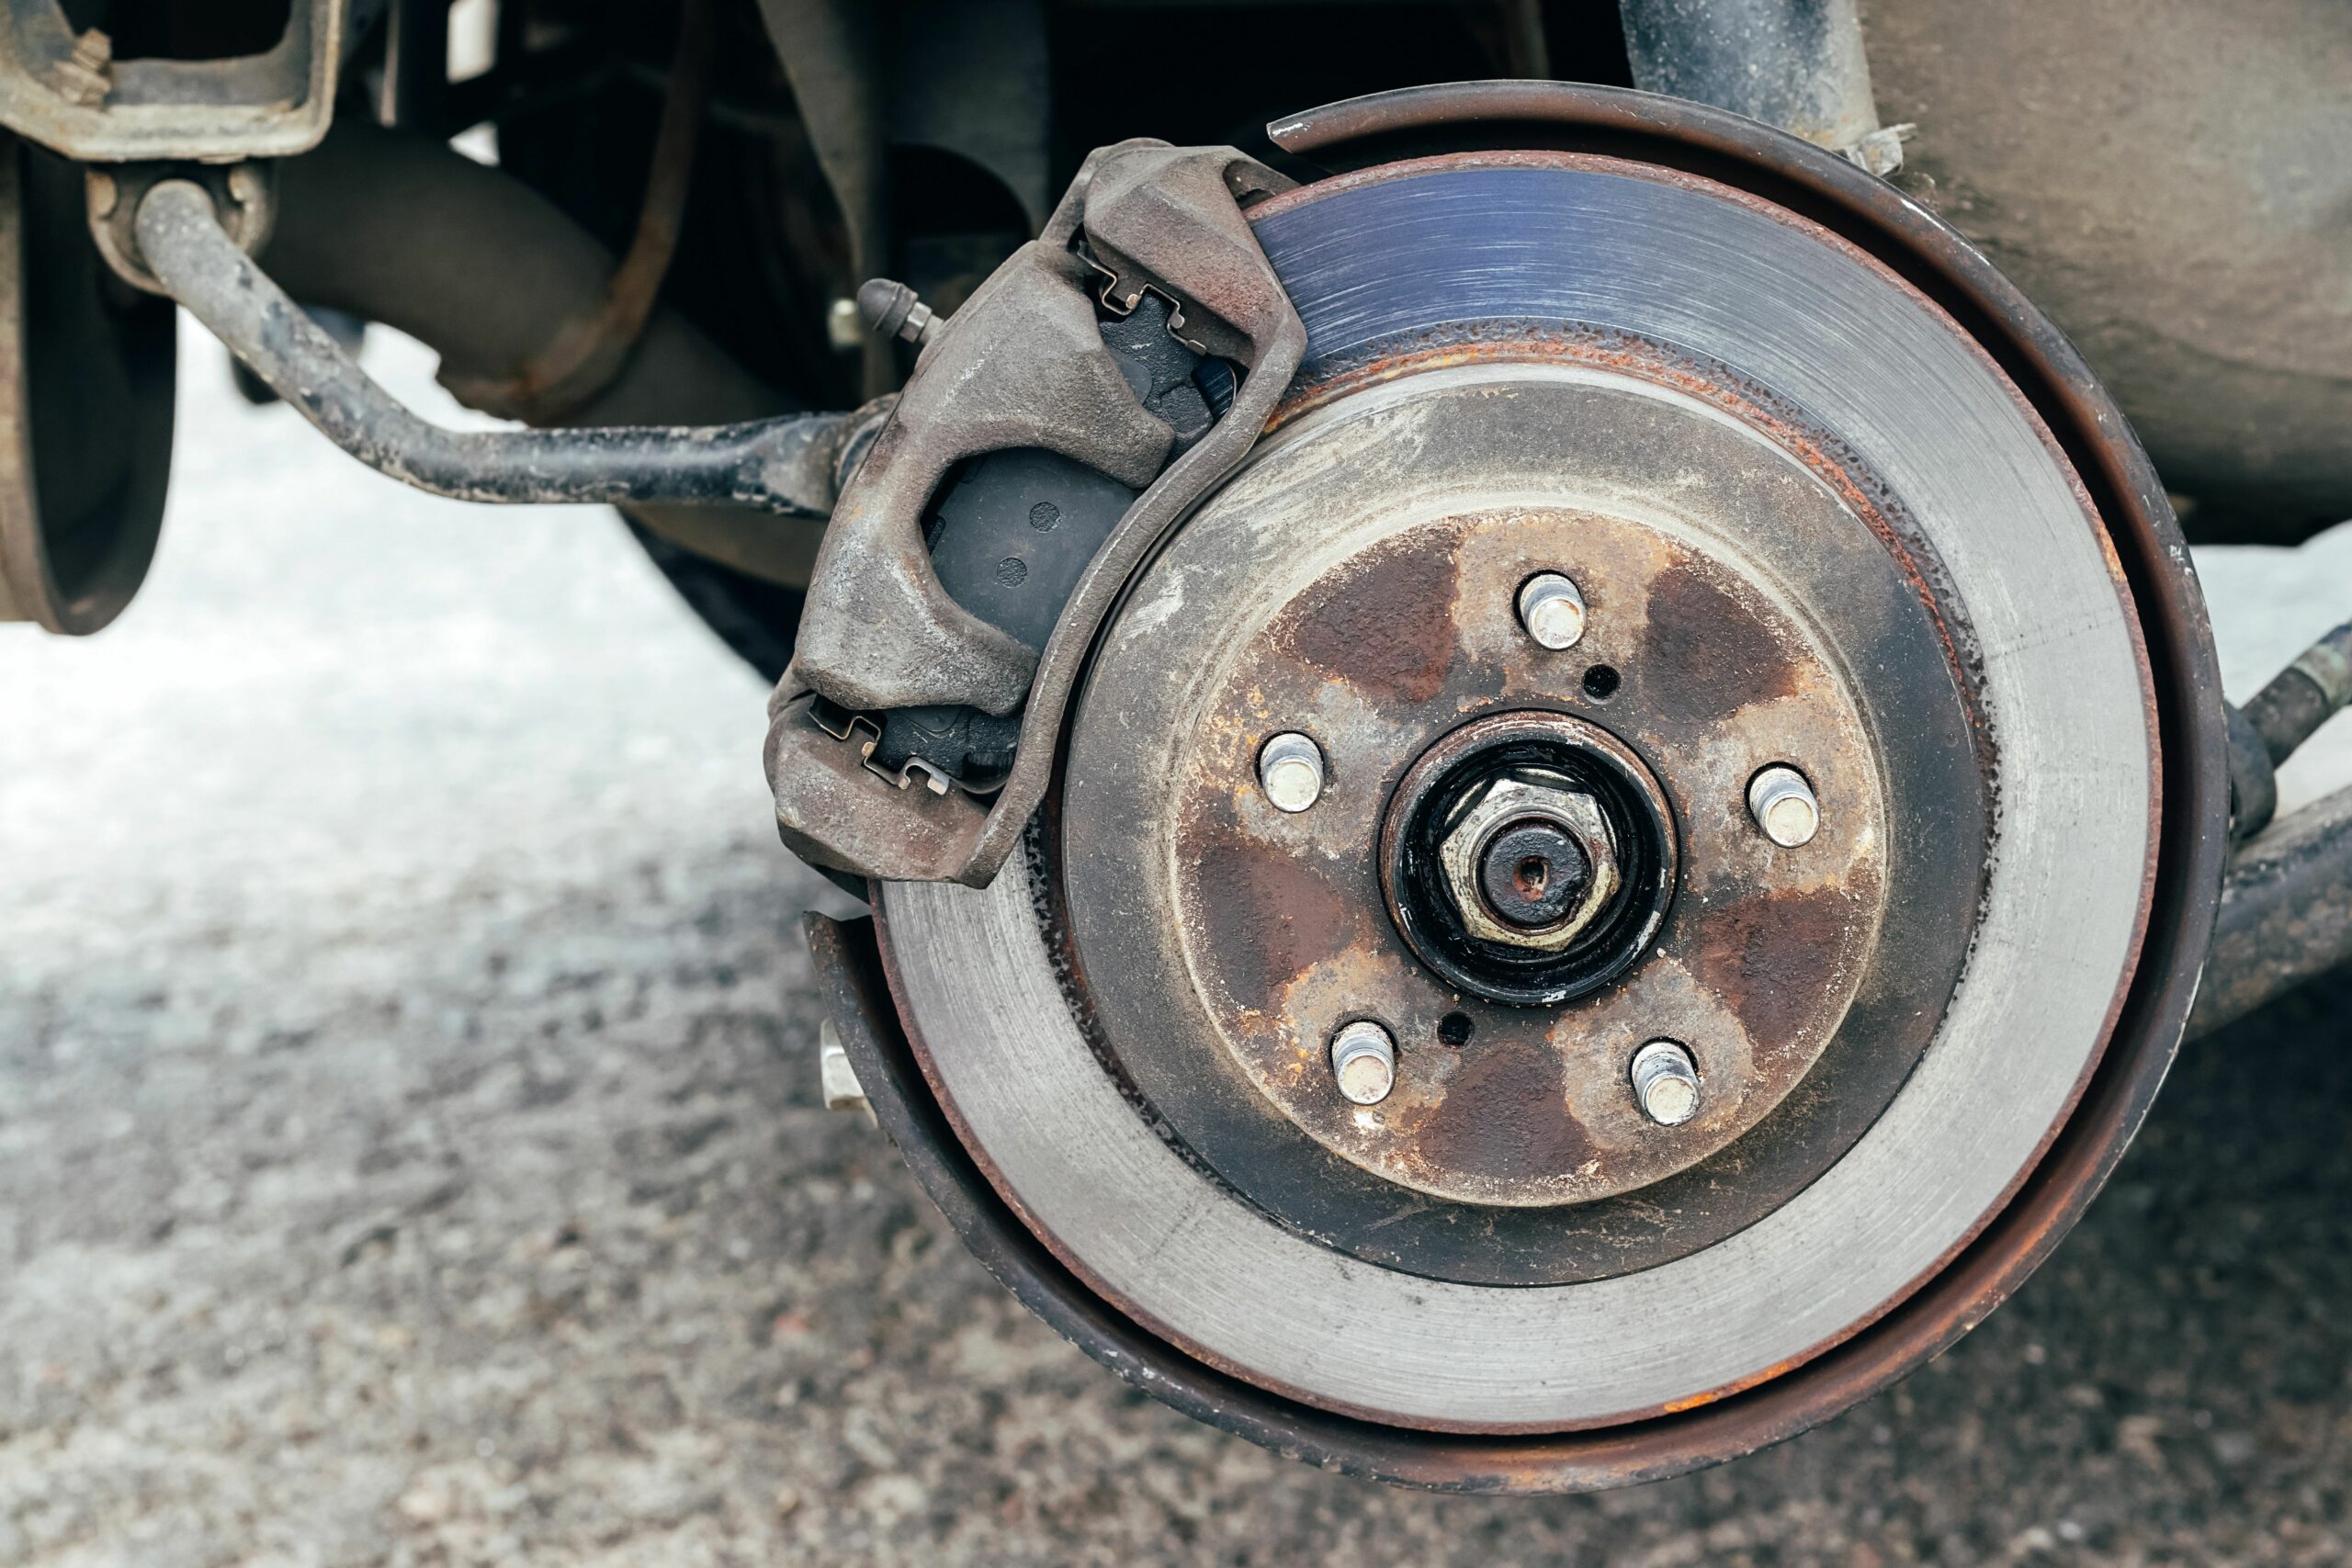 How do you use a wheel hub puller?